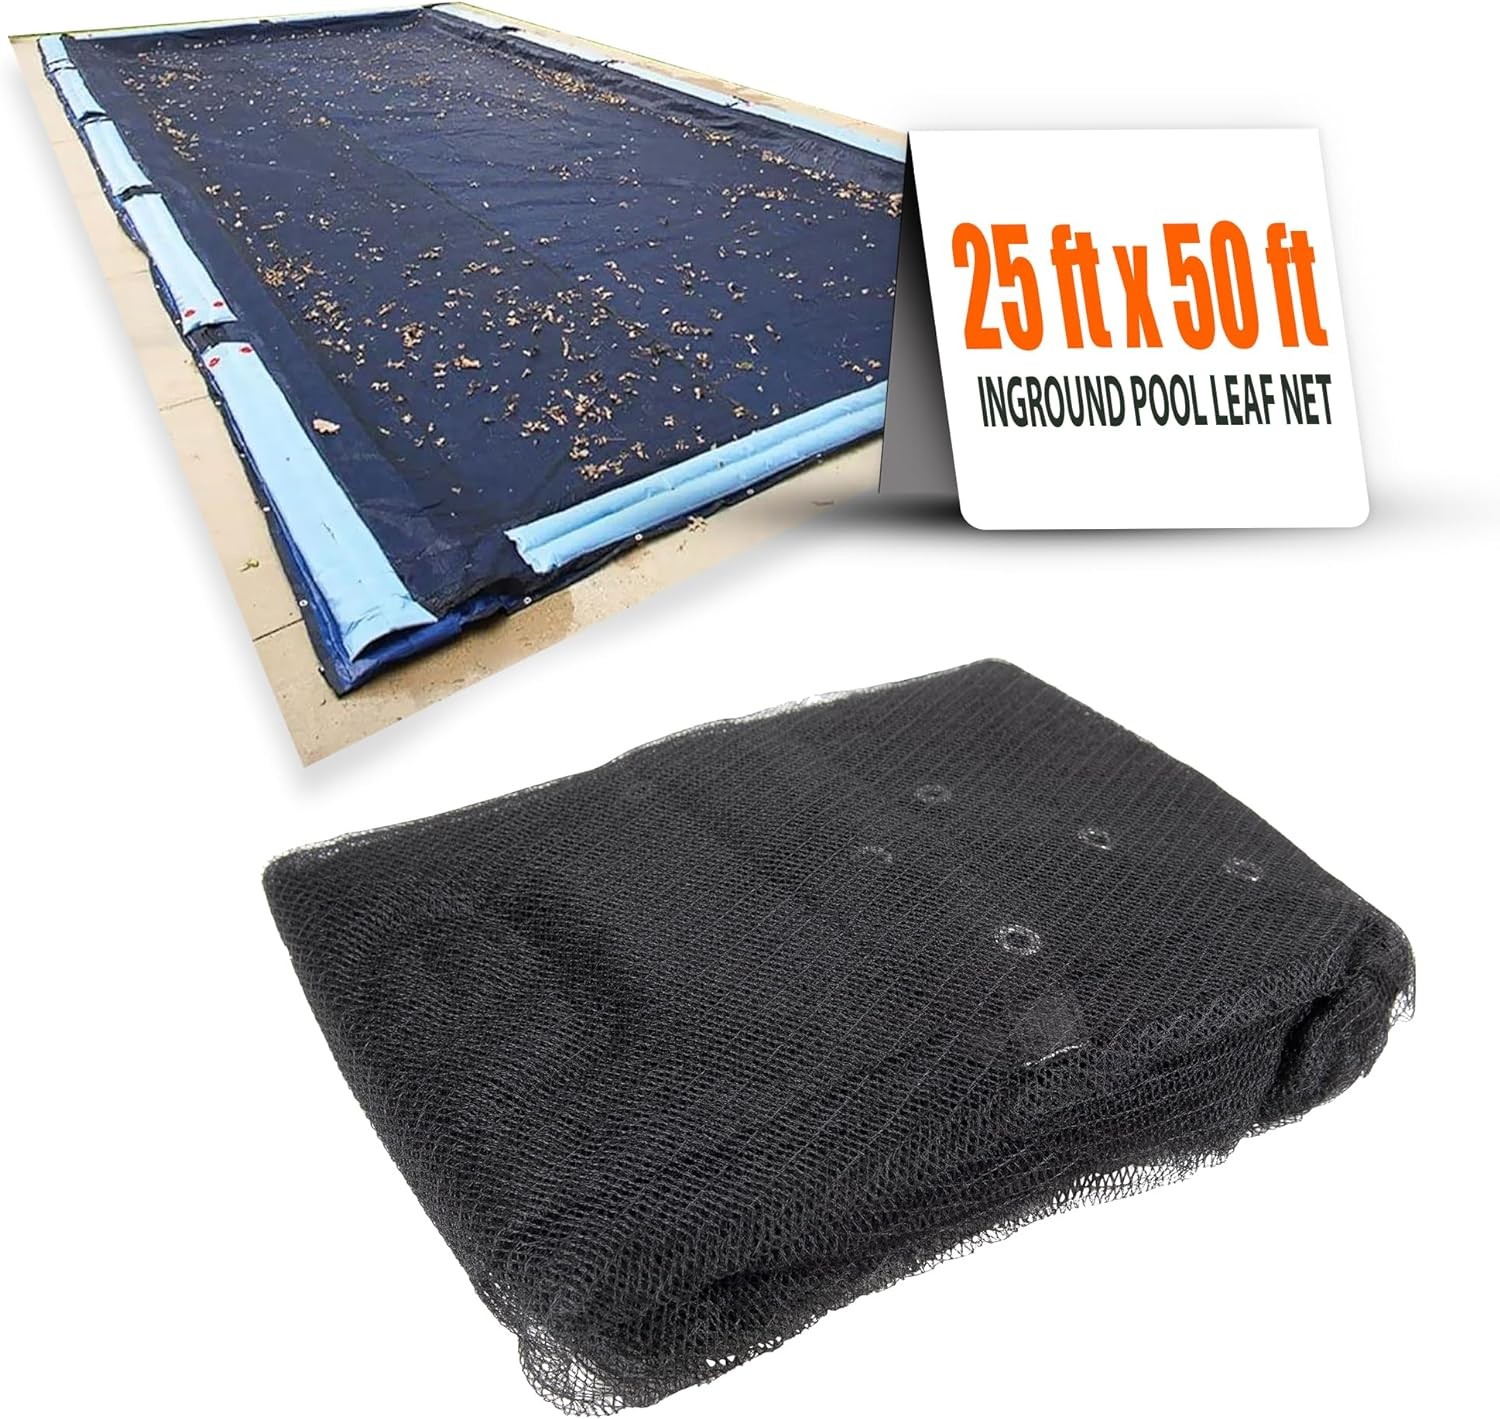 SET Sunsolar Energy Technologies Leaf Net Cover for 25 ft x 50 ft Rectangular Inground Swimming Pool with Extra 4 ft Overlap